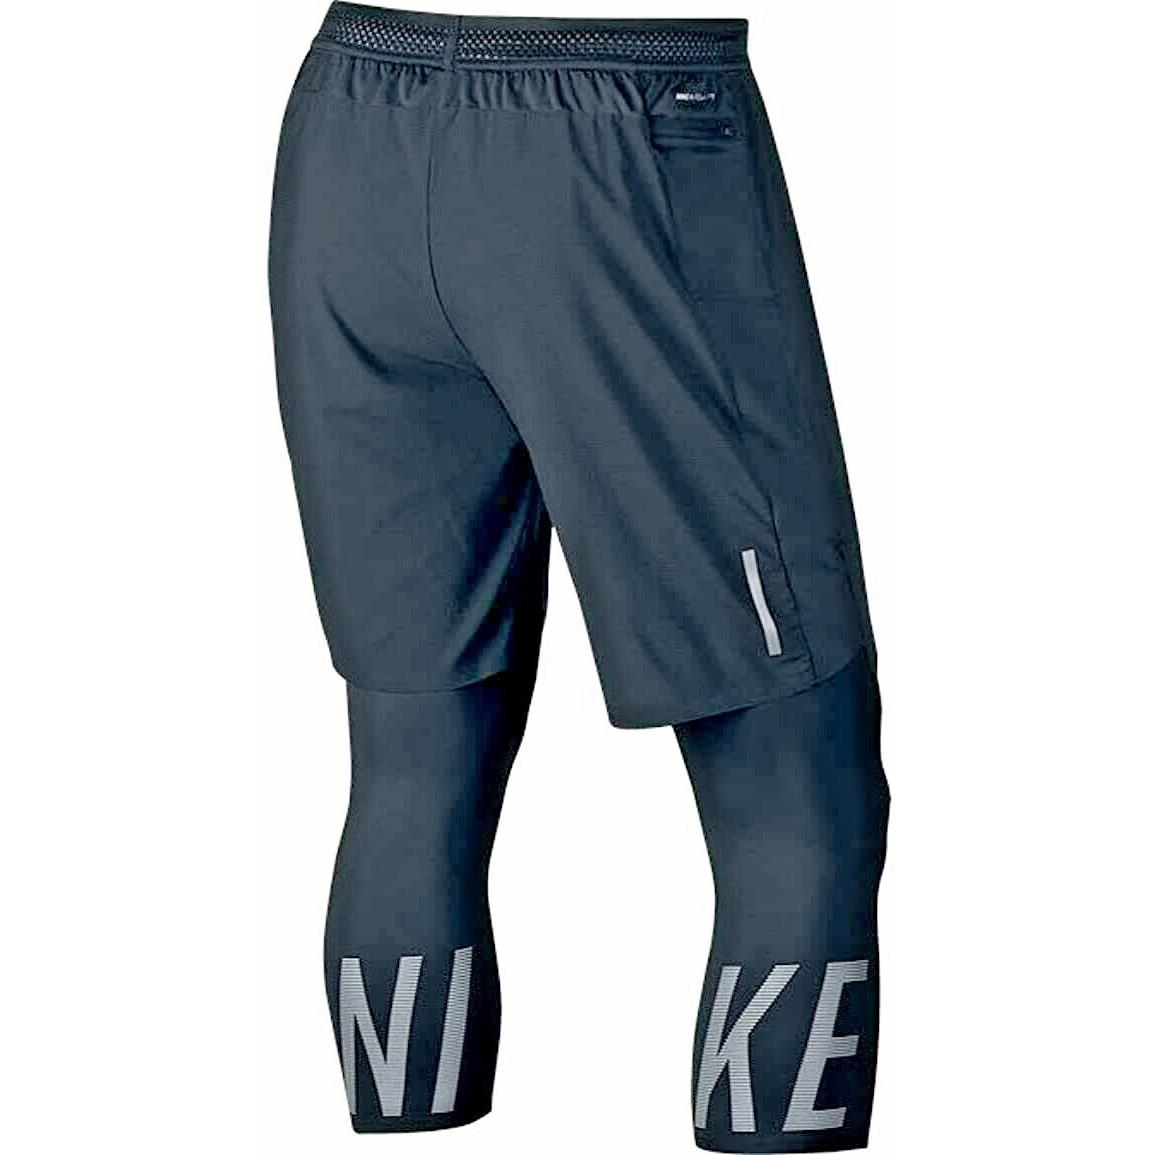 Nike Men`s Aeroswift 2-in-1 3/4 Hybrid Shorts Legging Capri 852321 Black -xs